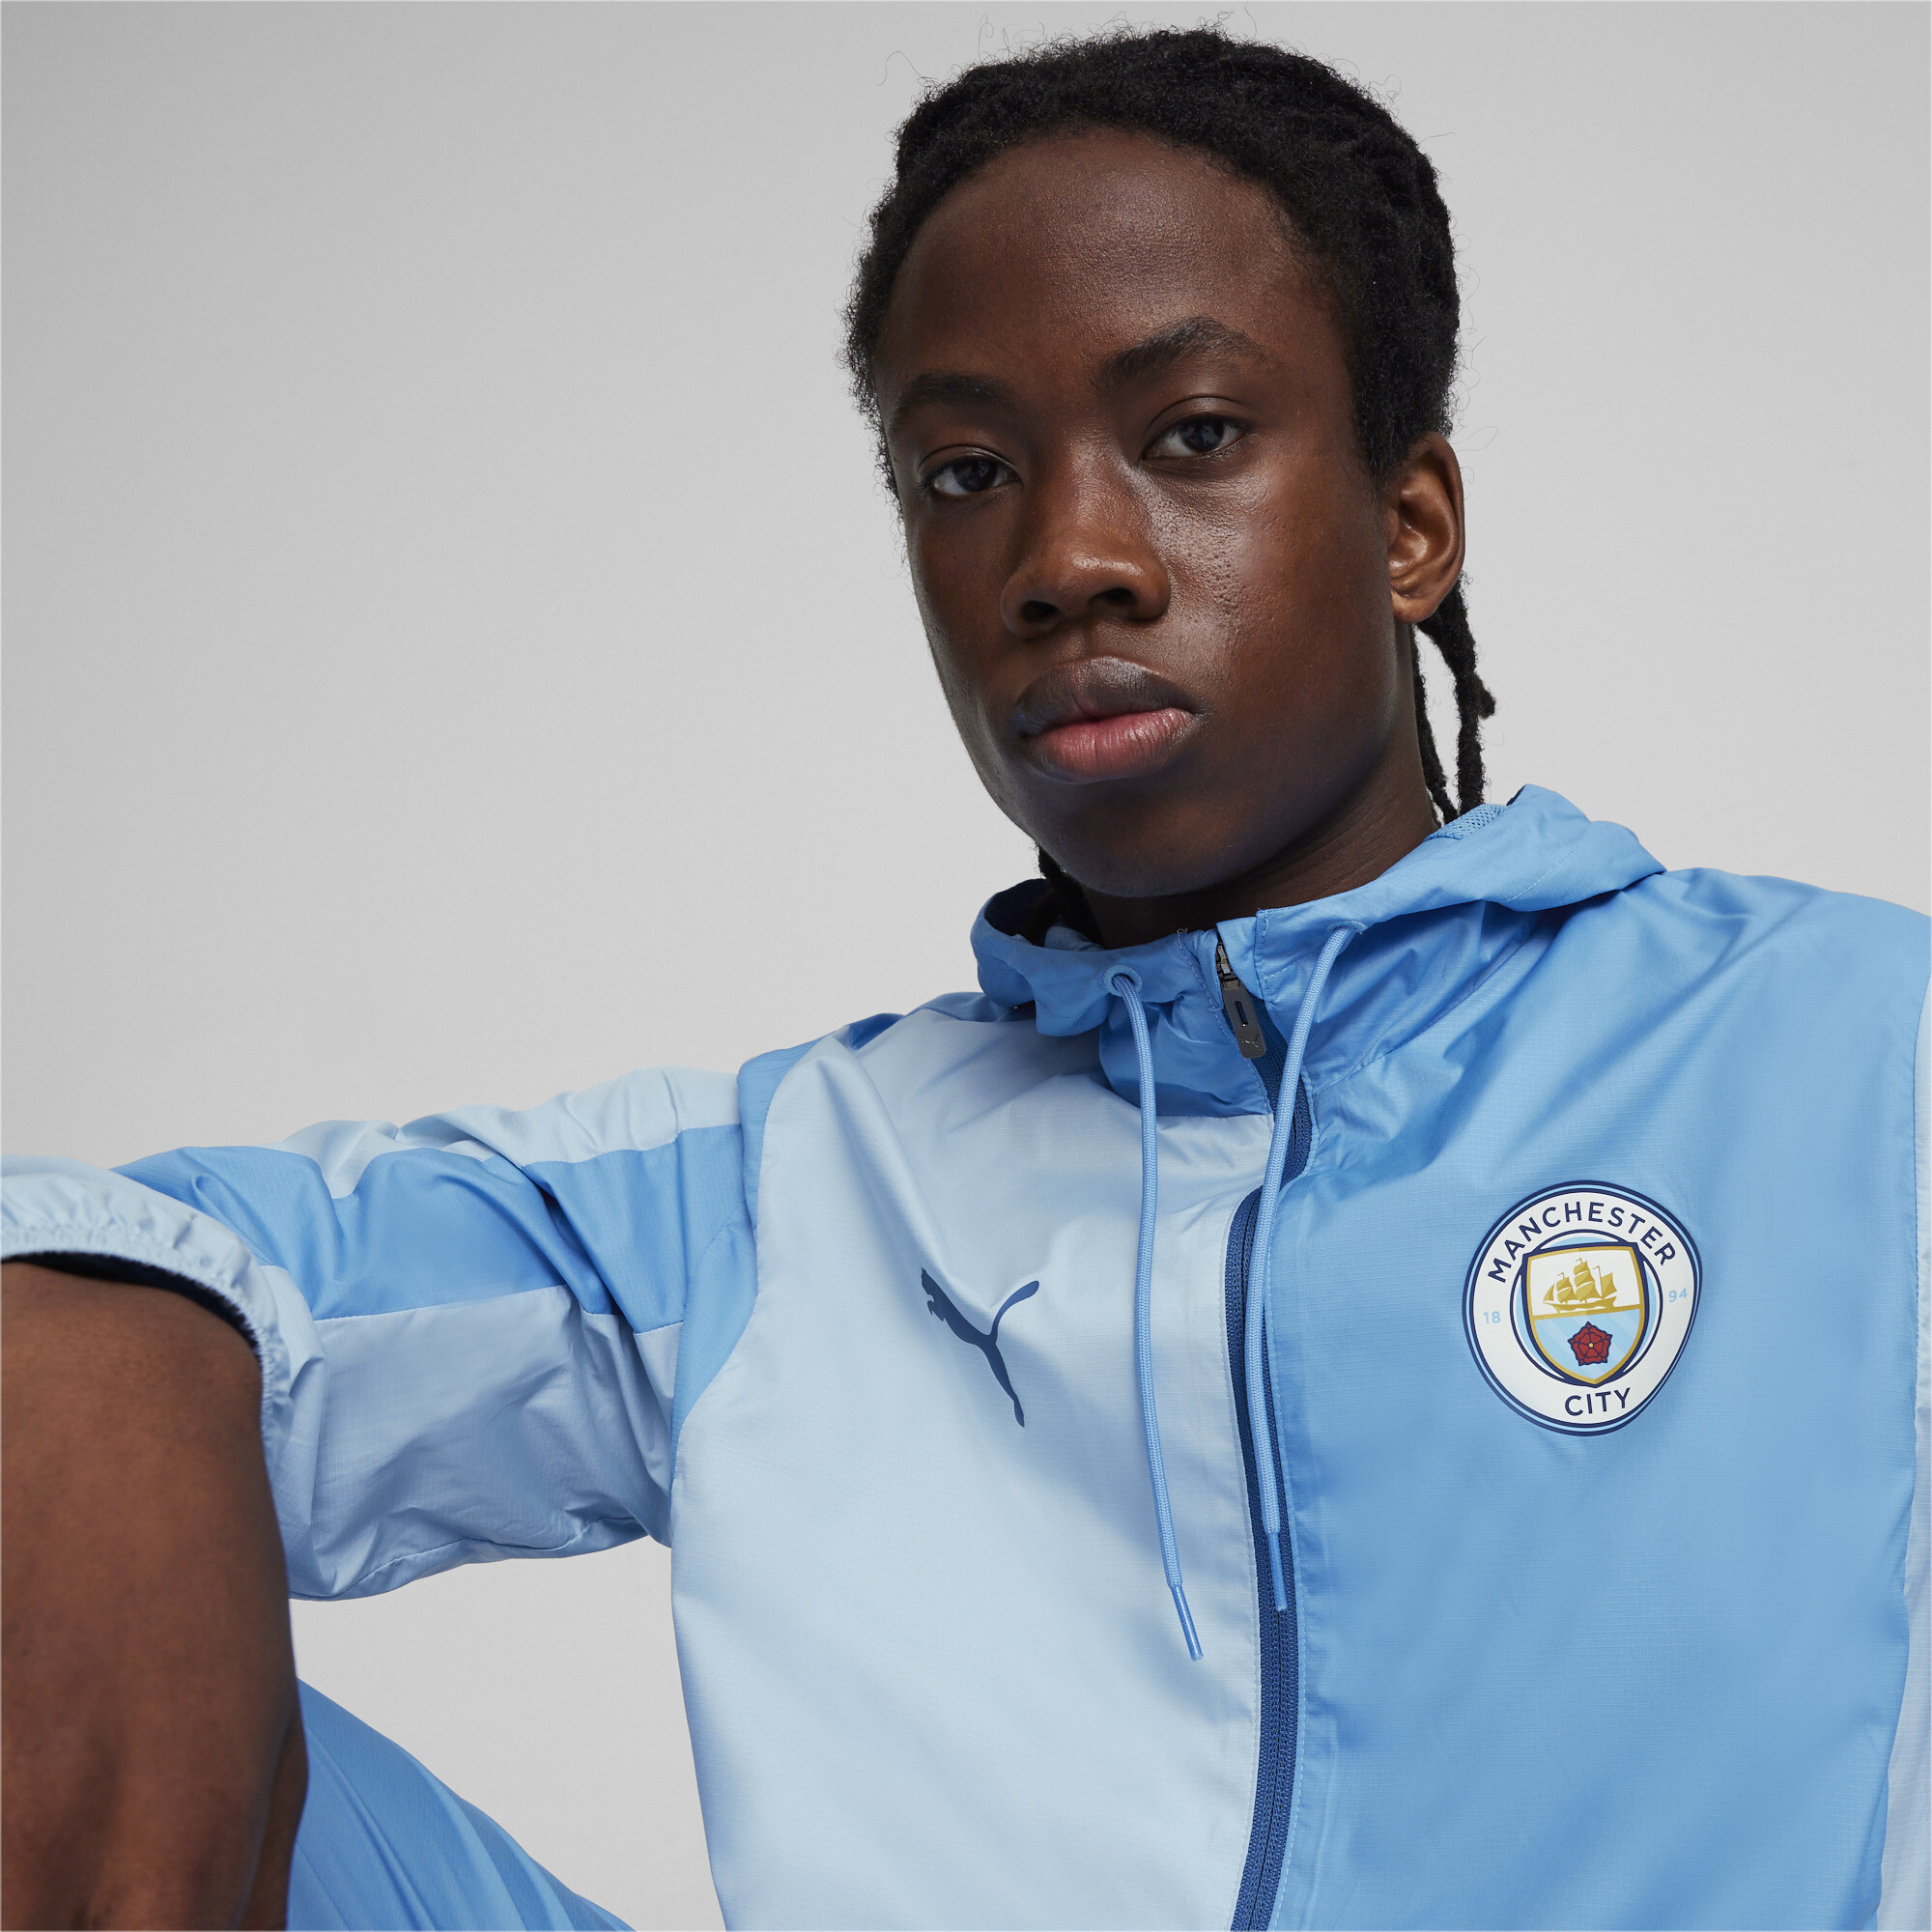 Men's PUMA Manchester City Pre-match Jacket In Blue, Size XL